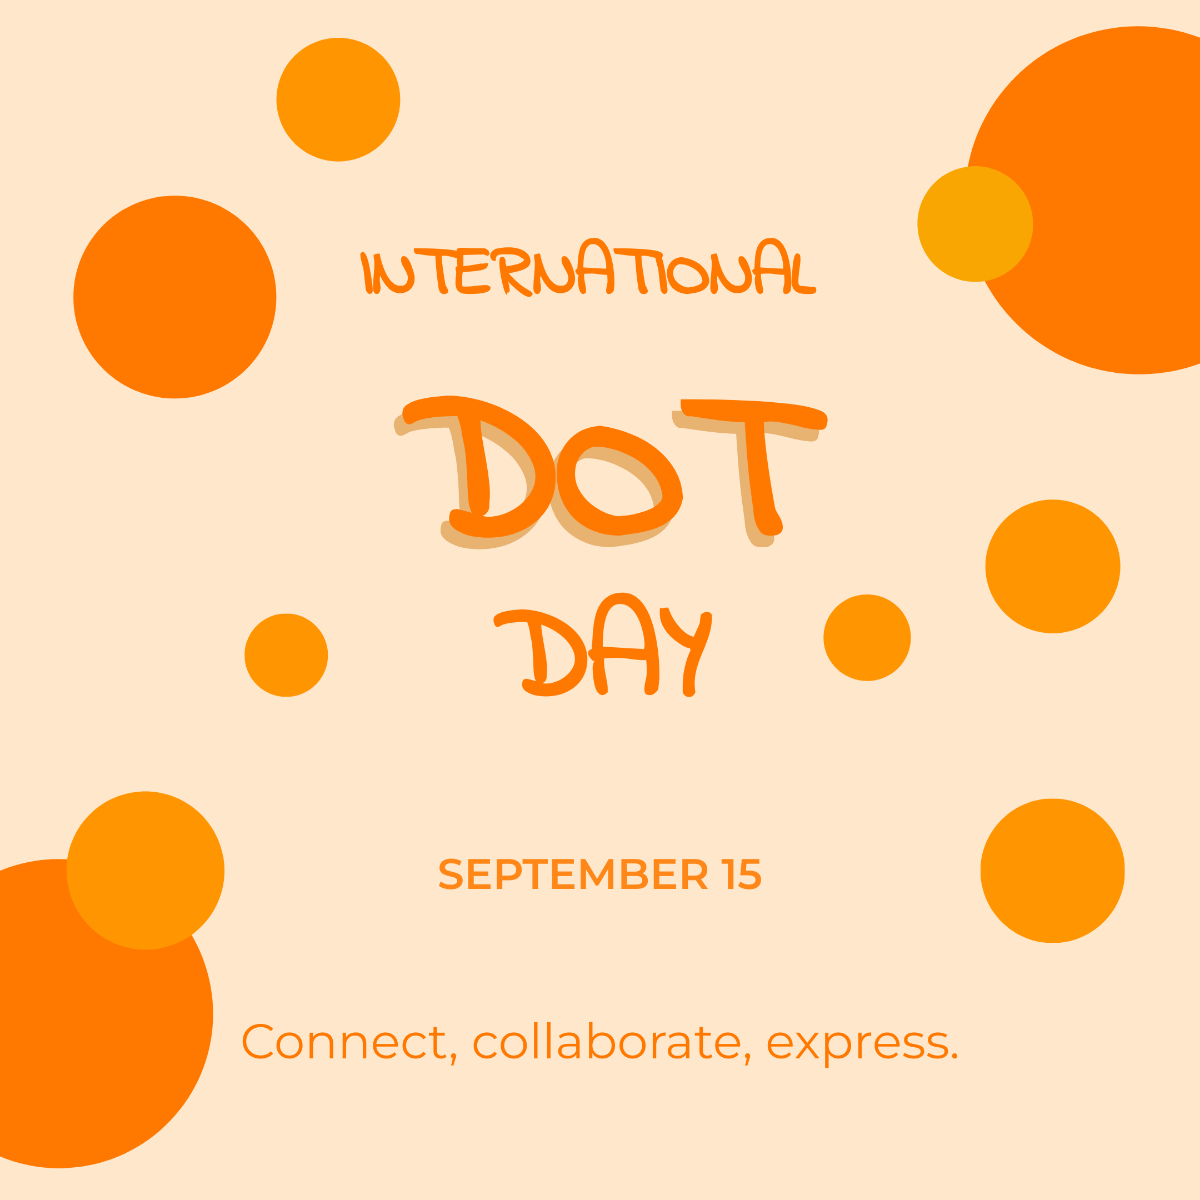 International Dot Day FB Post